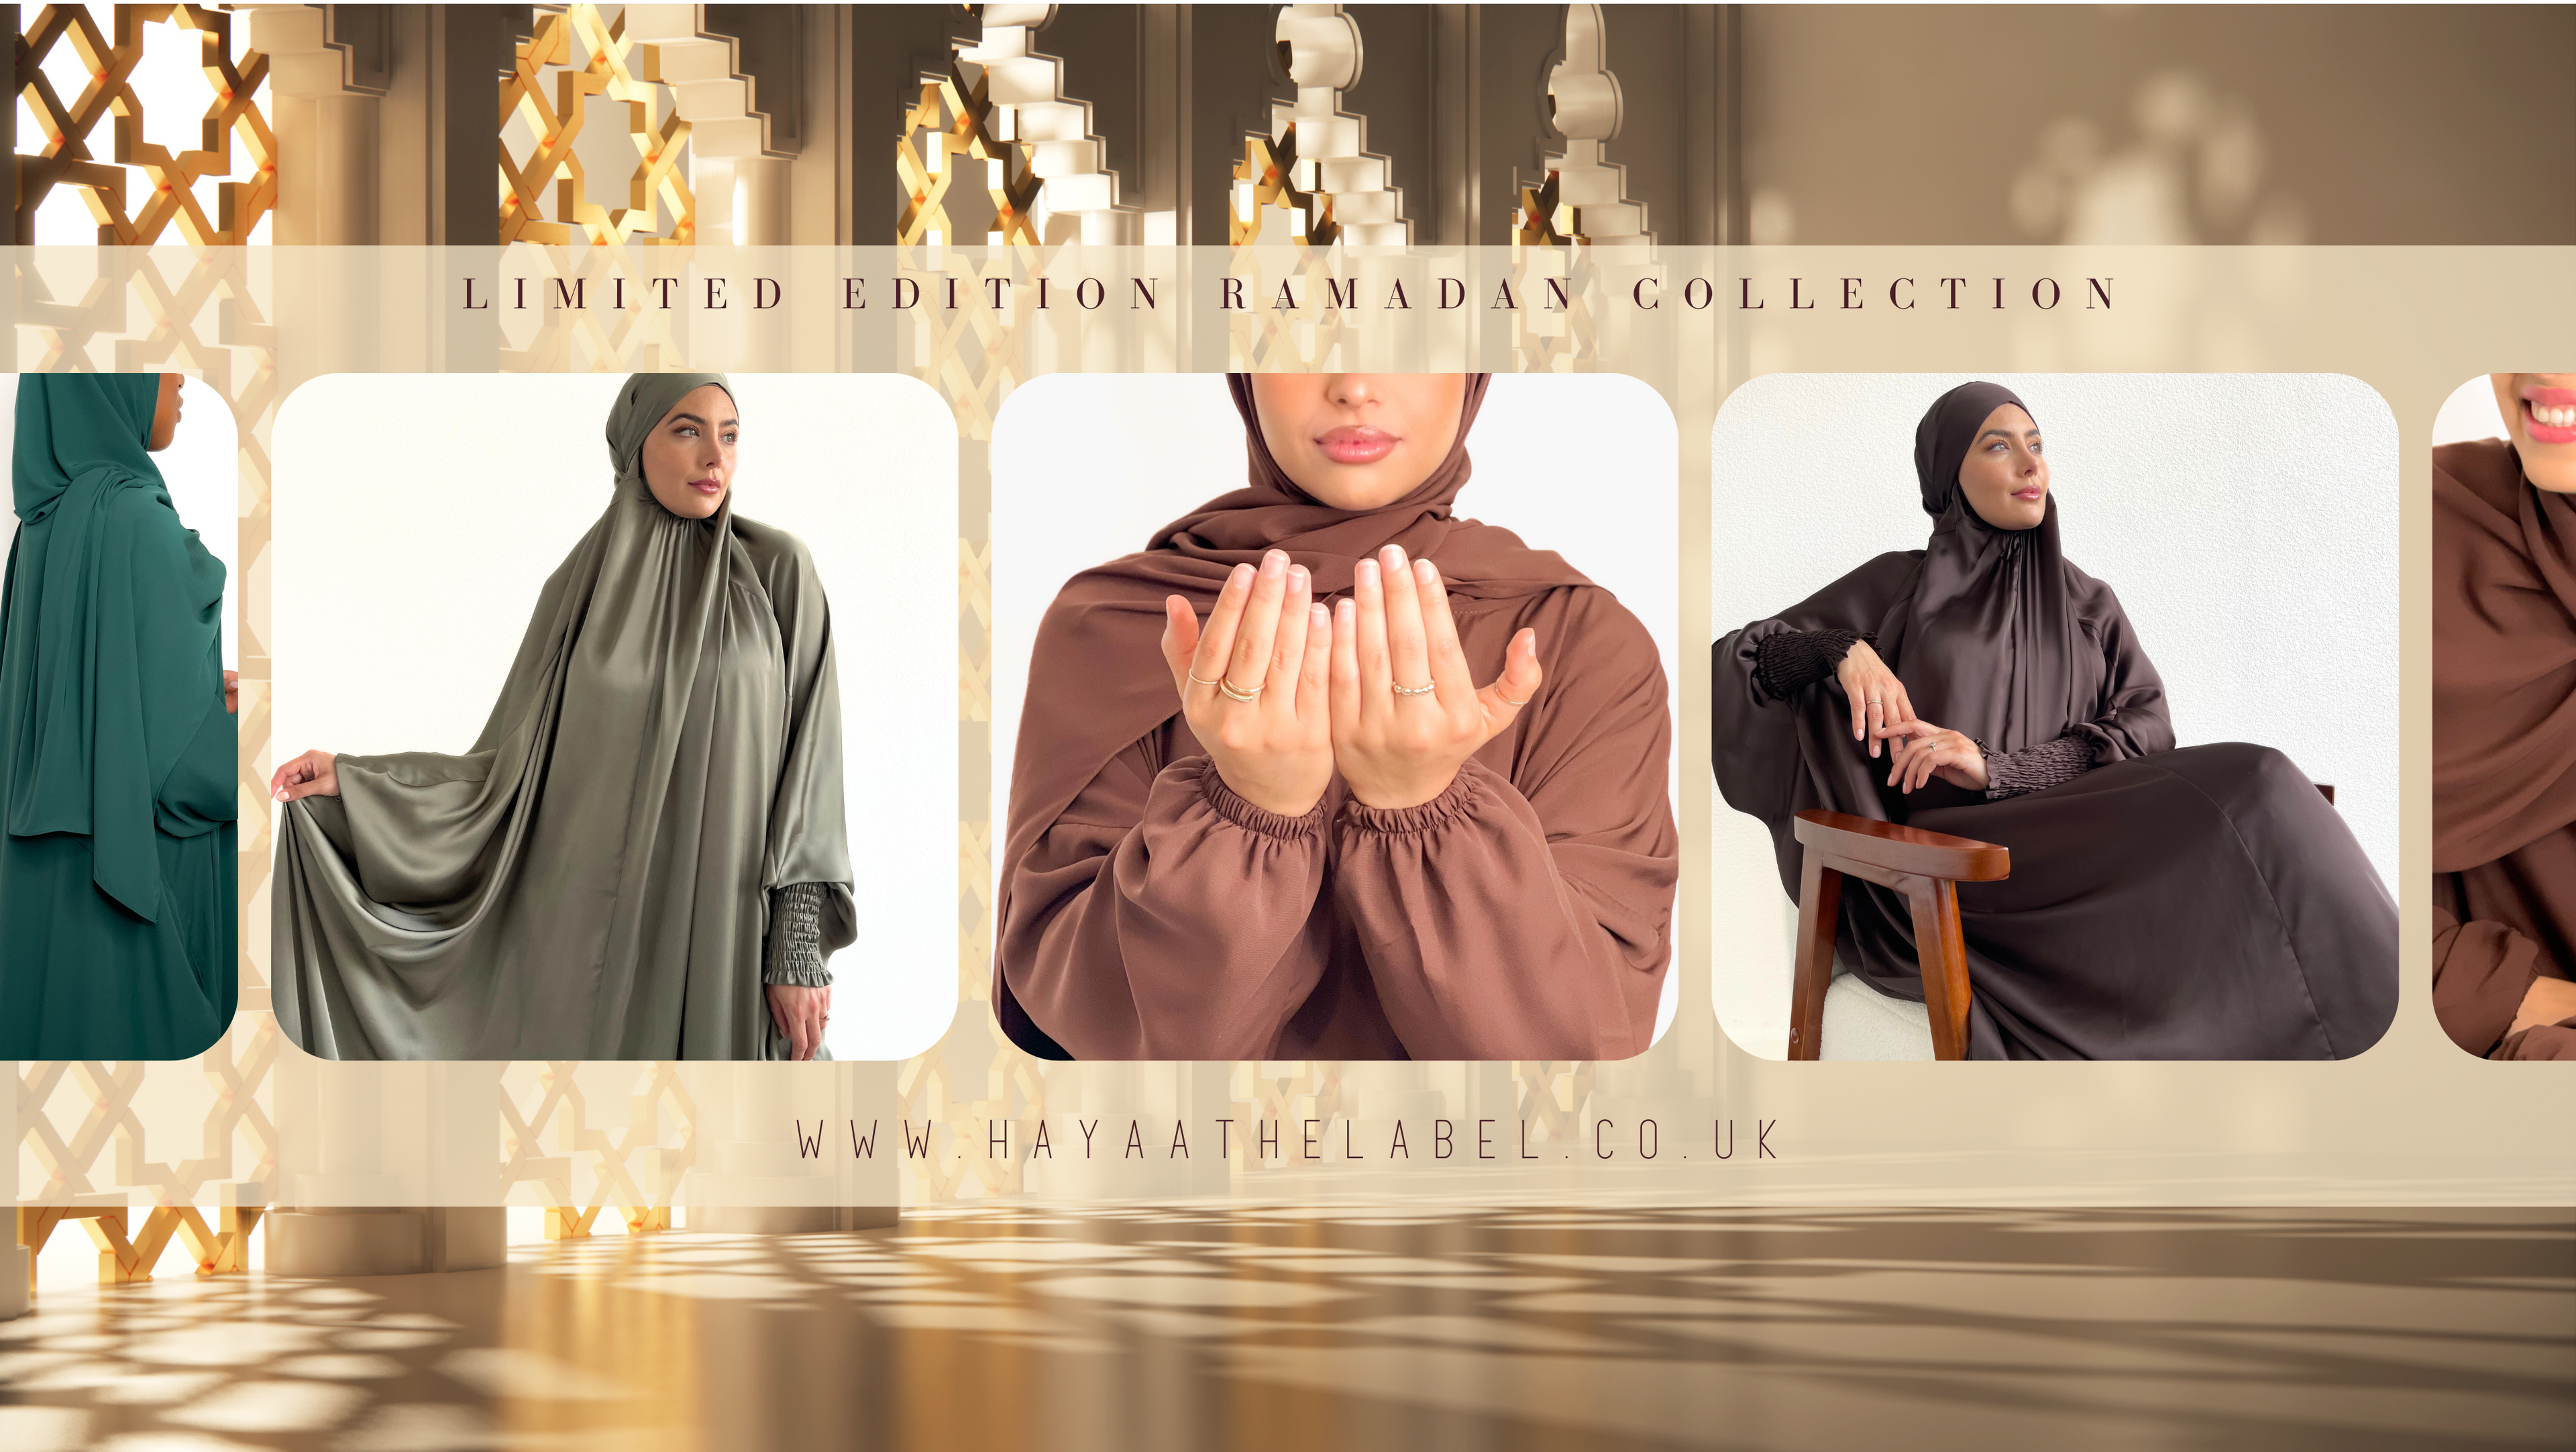 ramadan collection